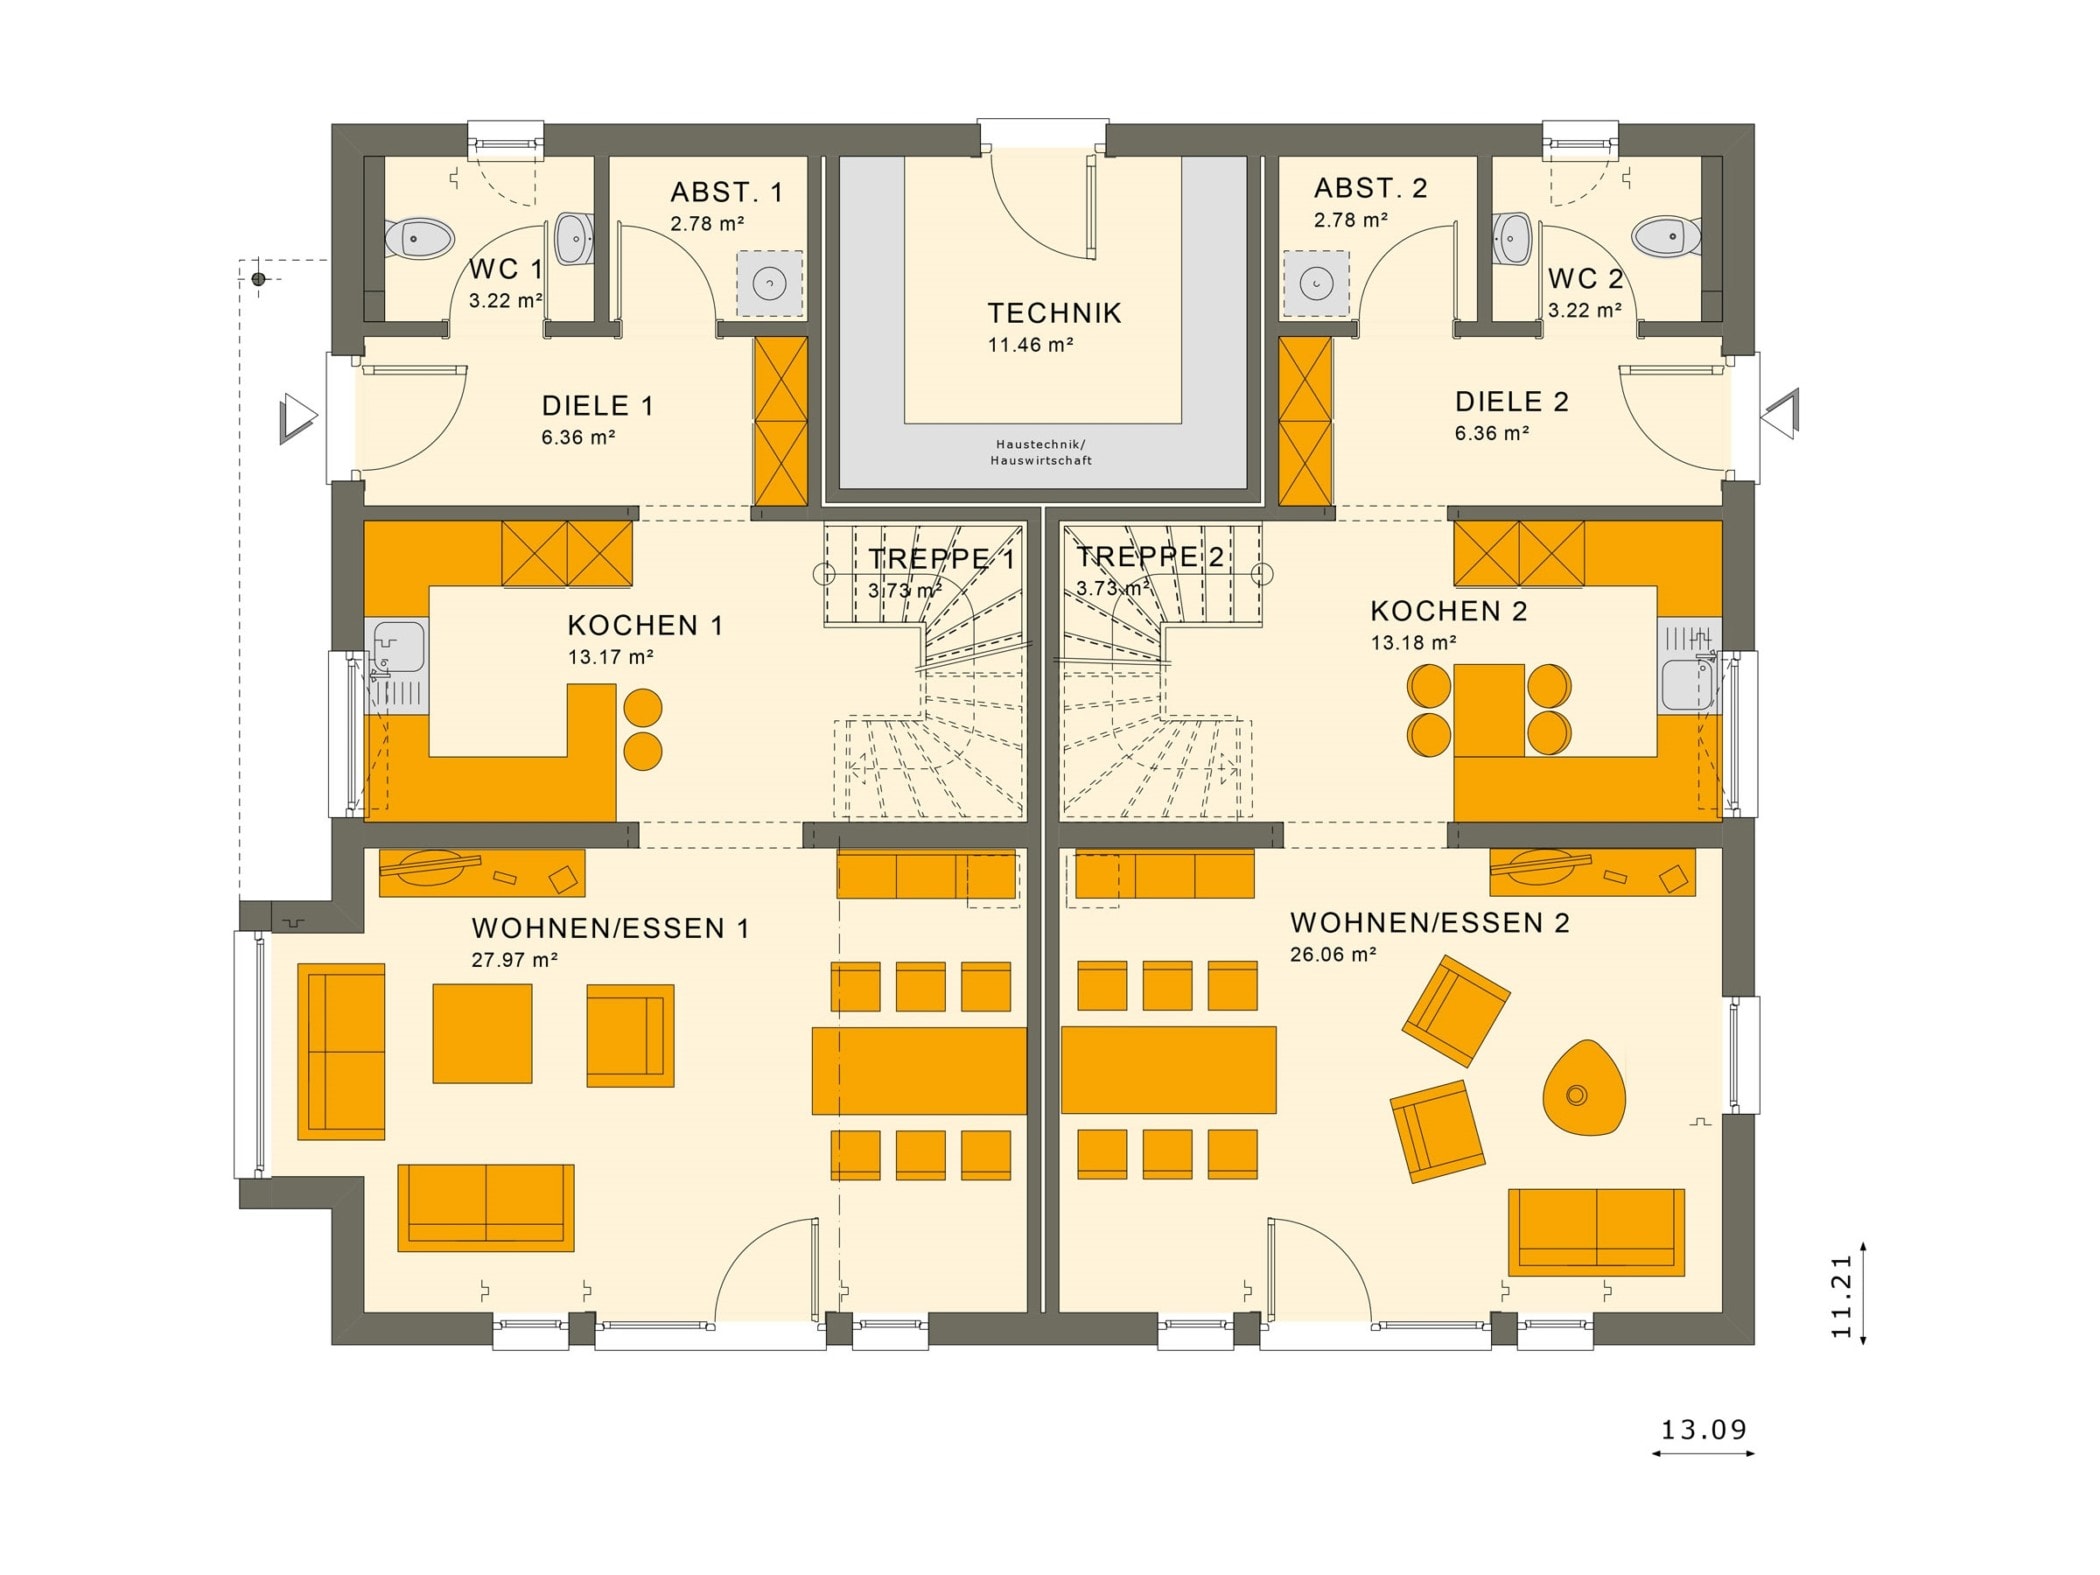 Zweifamilienhaus Grundriss nebeneinander Erdgeschoss, zwei Eingänge - Doppelhaus bauen Ideen Fertighaus SOLUTION 242 V3 von Living Haus - HausbauDirekt.de